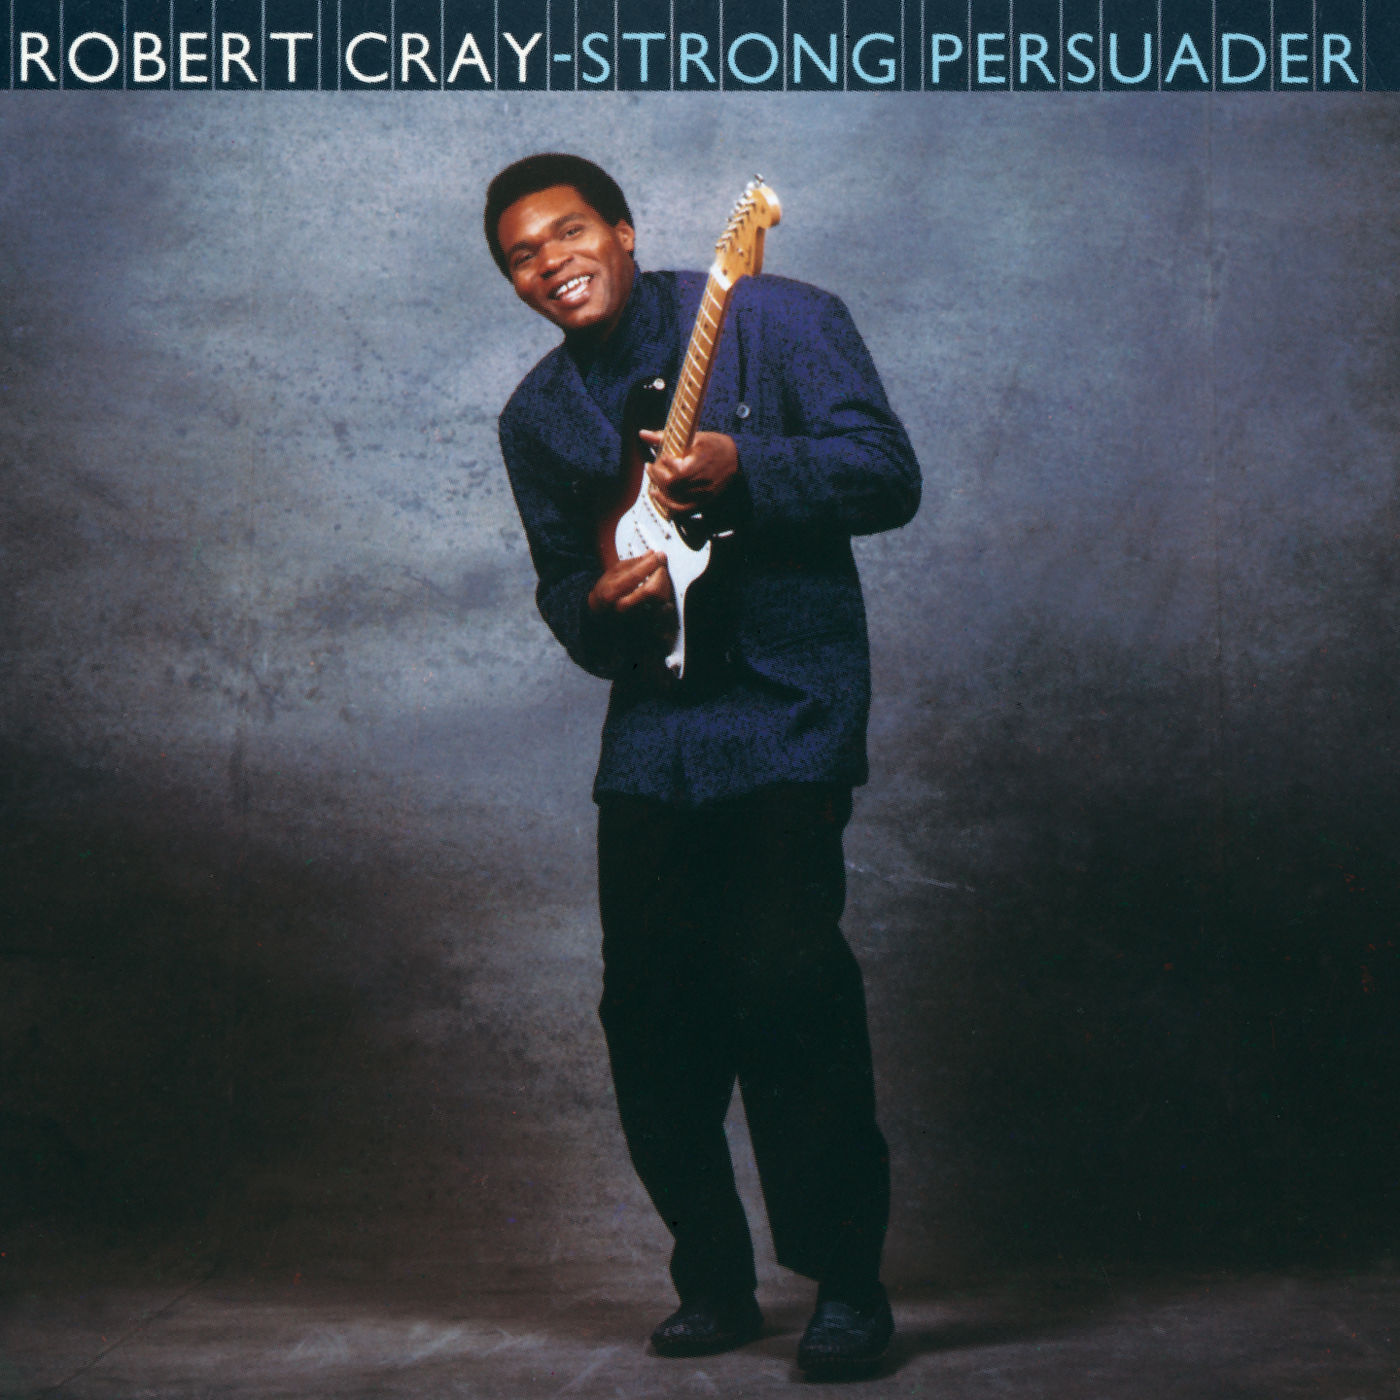 Robert Cray – Strong Persuader